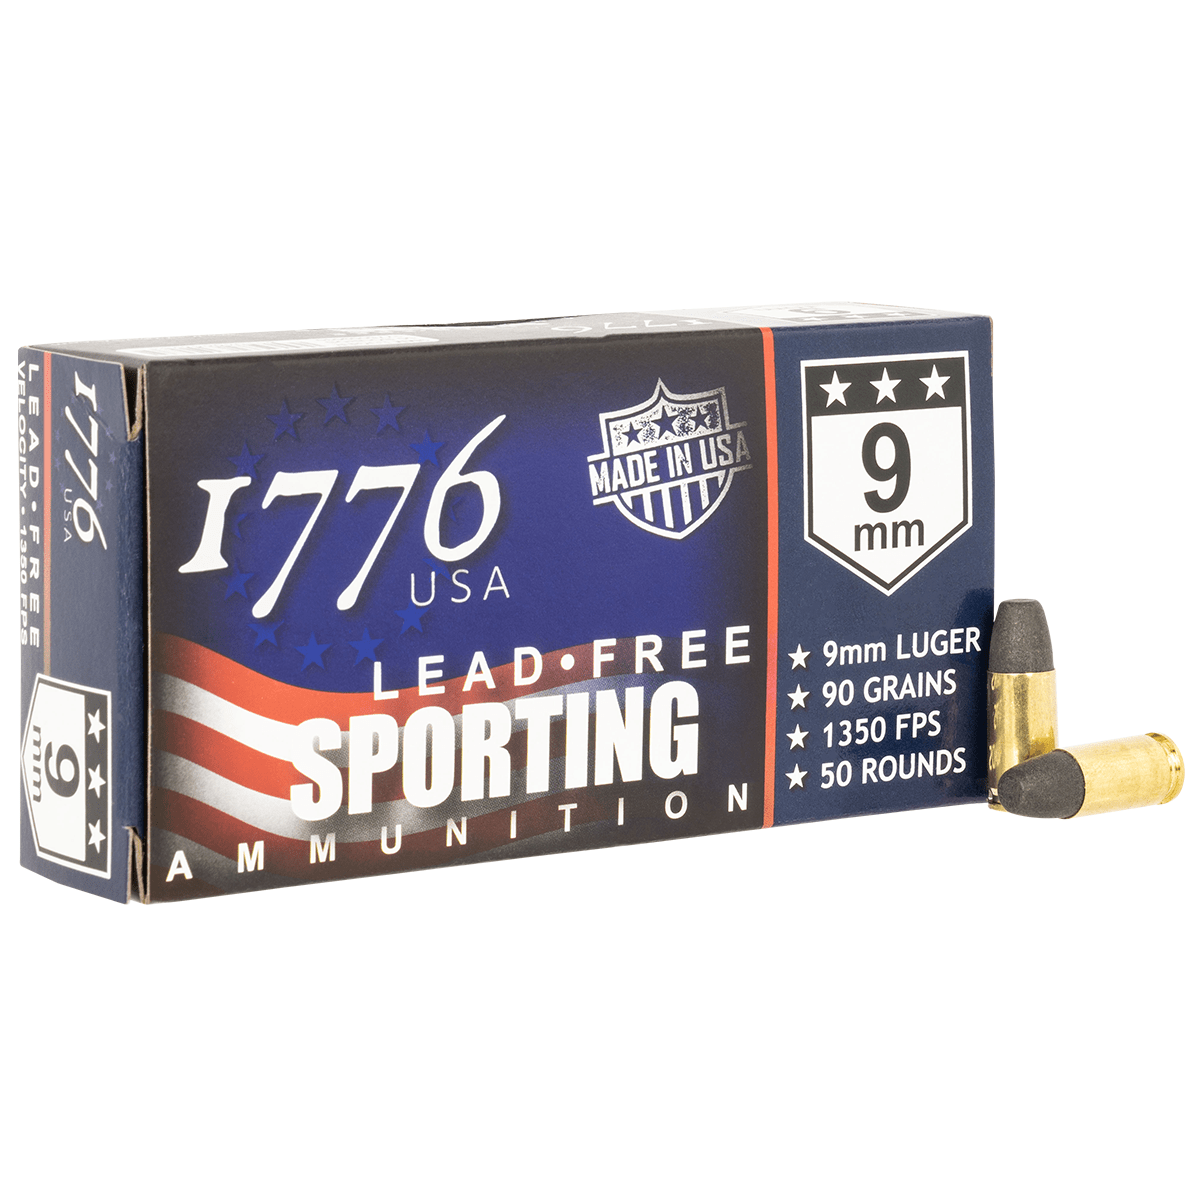 1776 USA Lead Free Sporting 9mm Luger 90 gr Lead Free Ball 50 Per